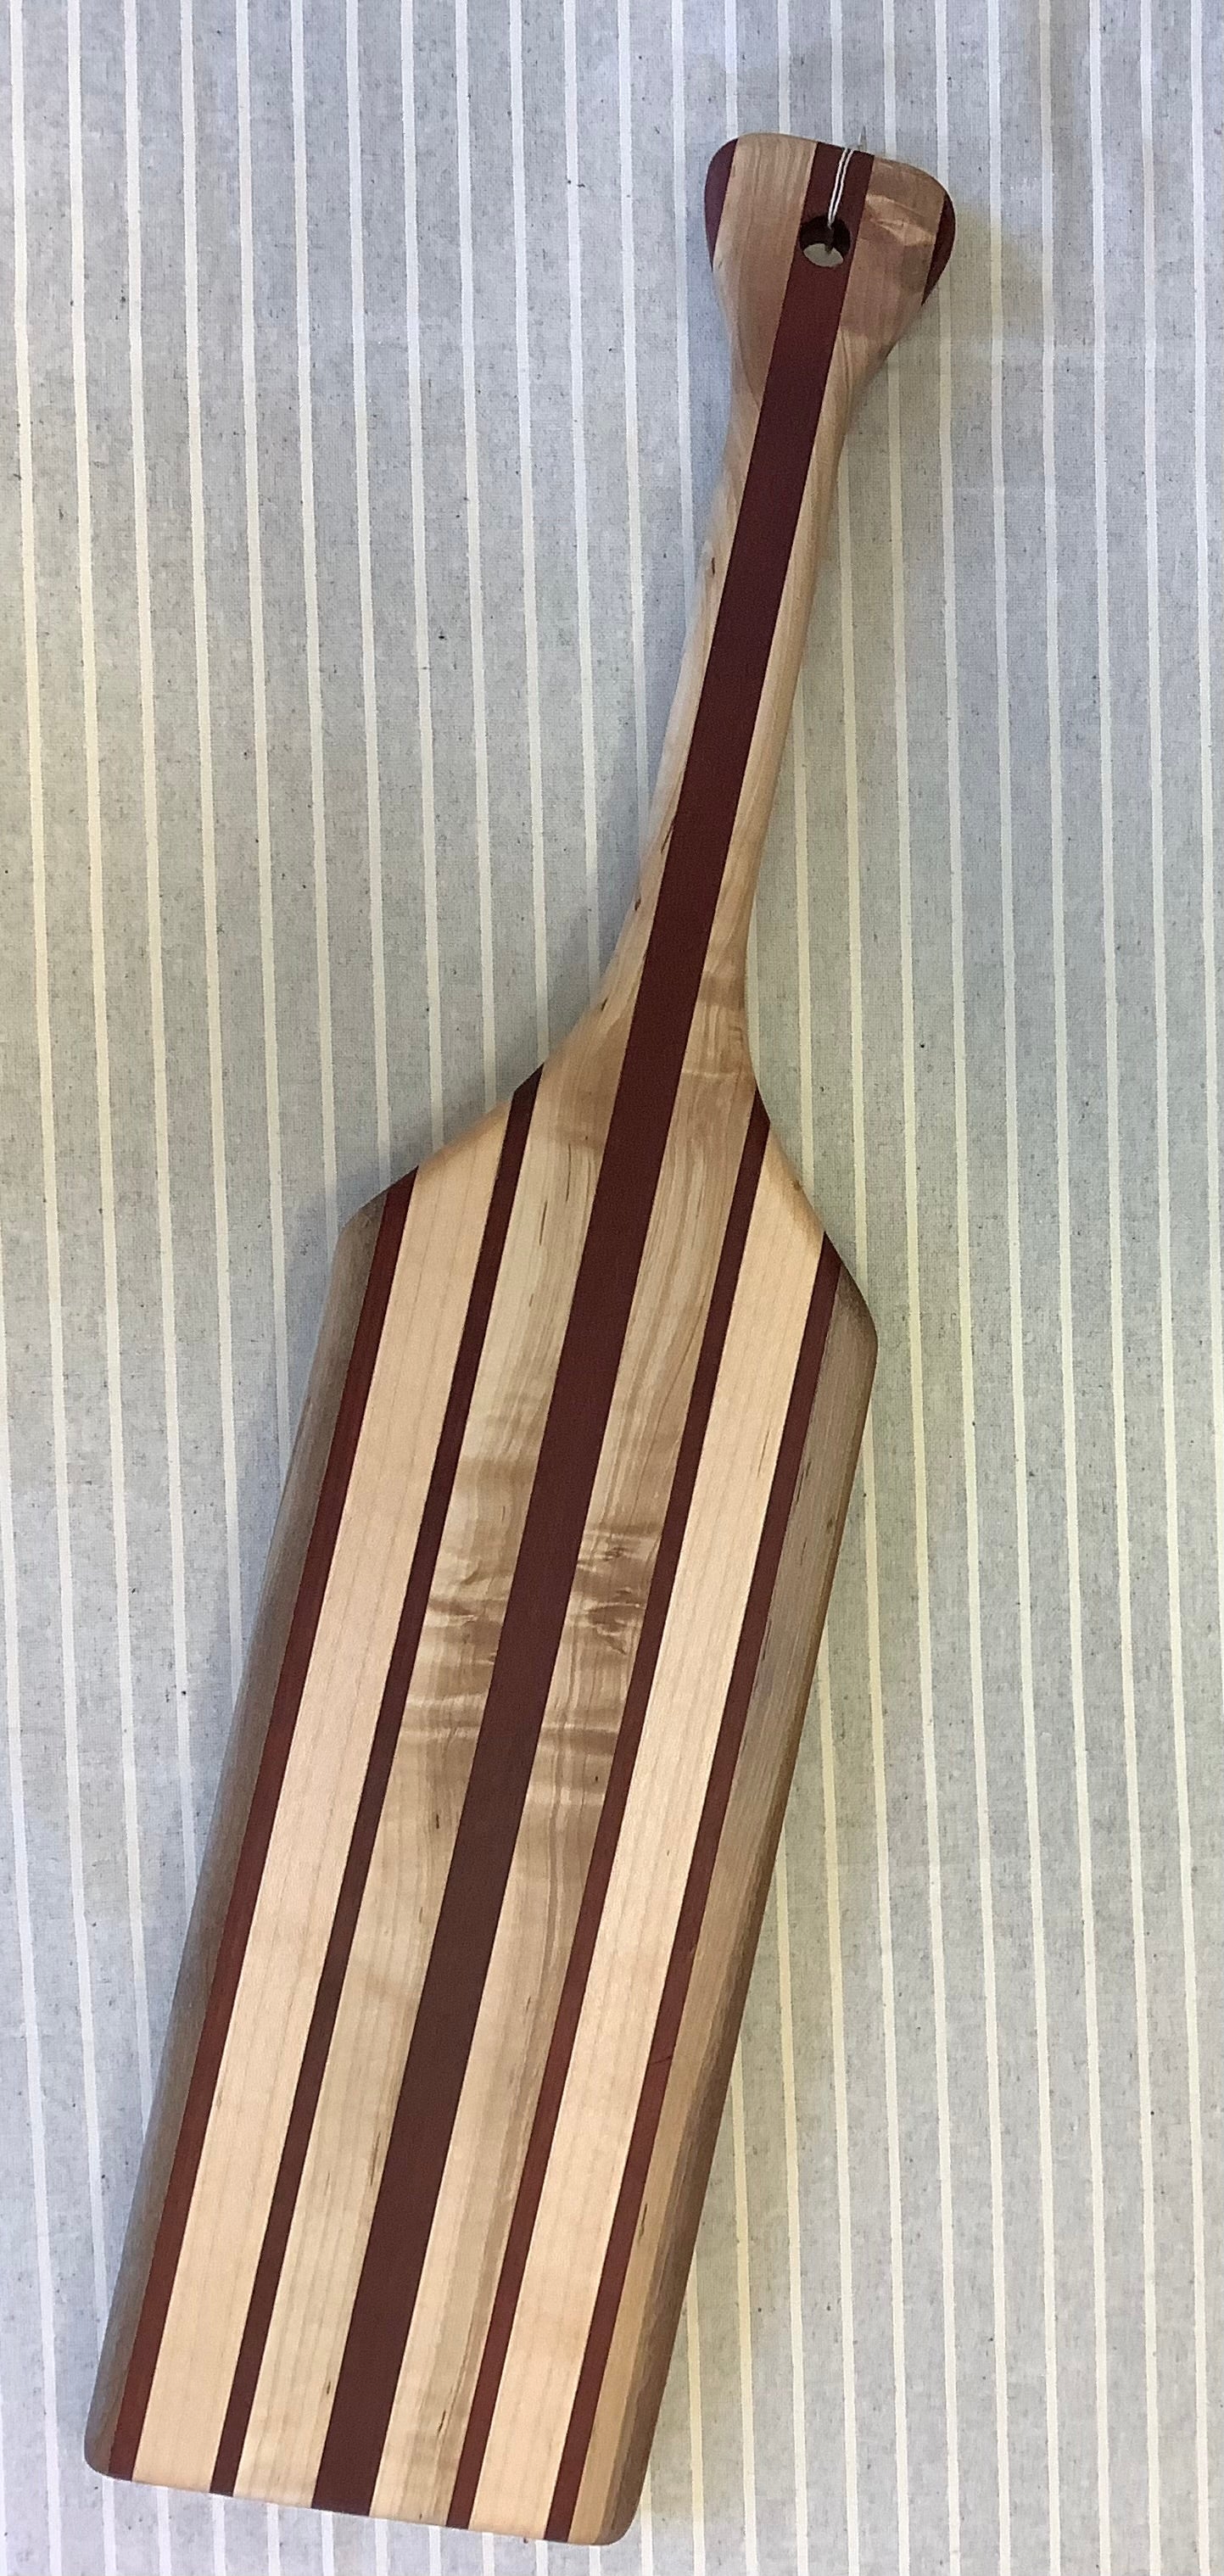 Wooden Breadboard - Paddle